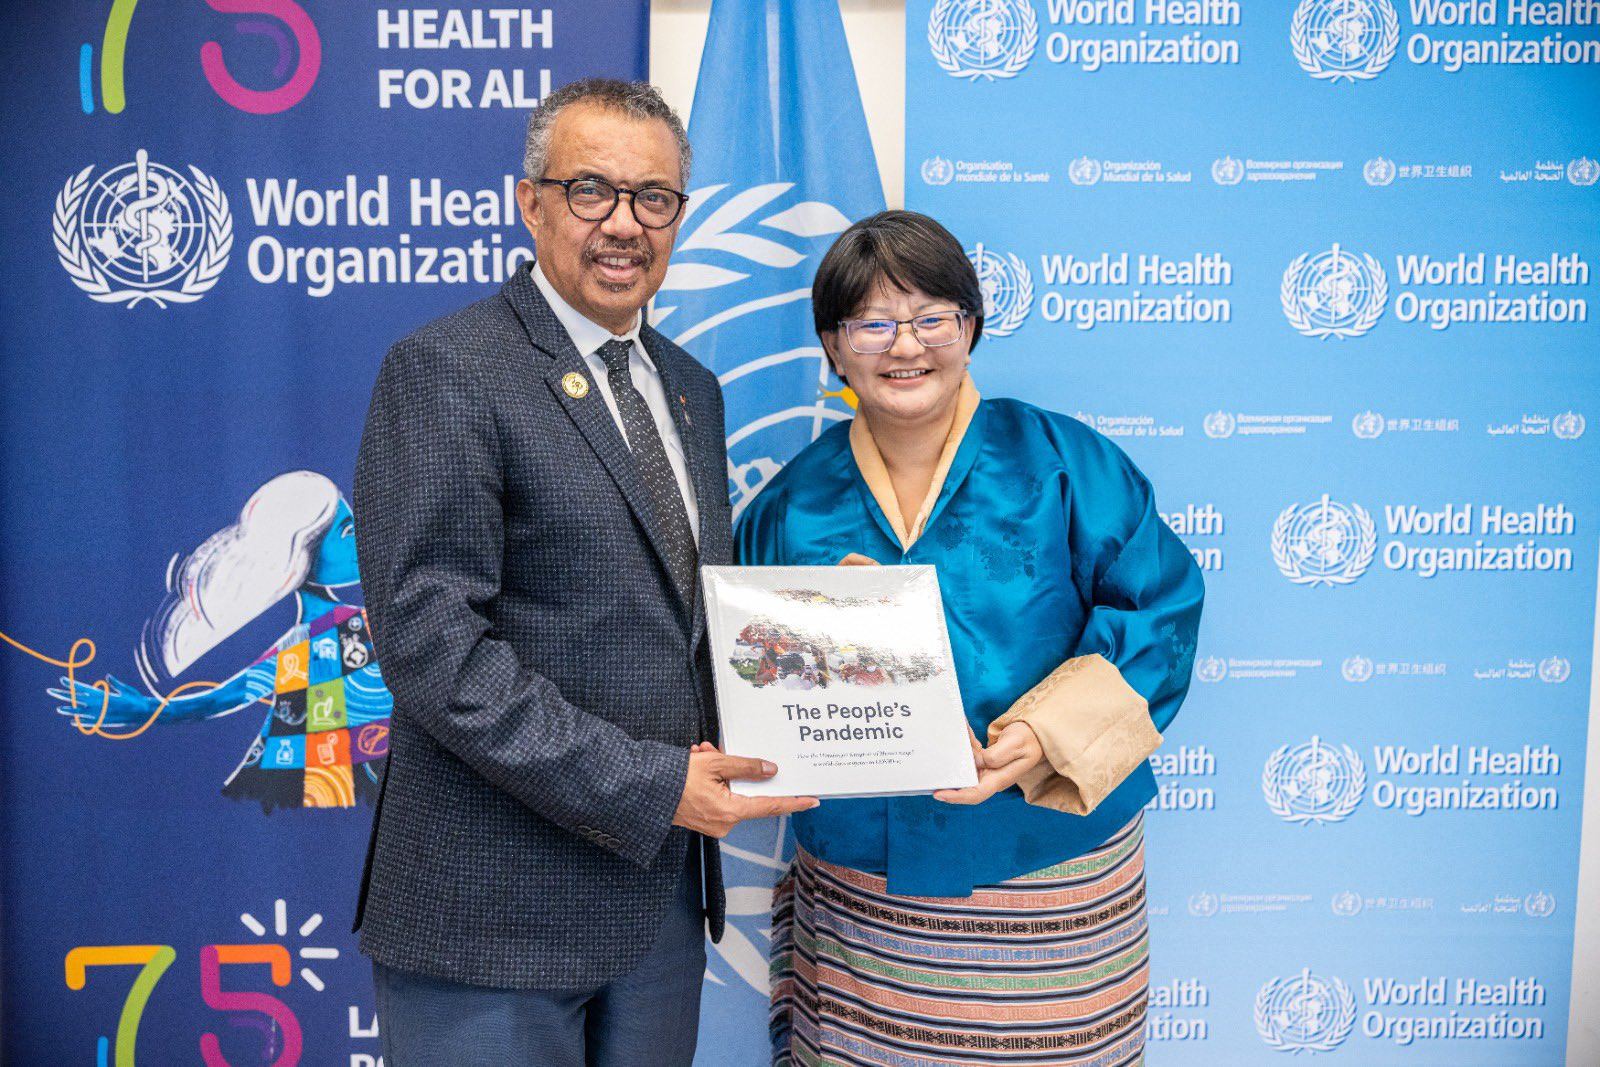 Press Release for Seventy-Sixth World Health Assembly, Geneva, 21 